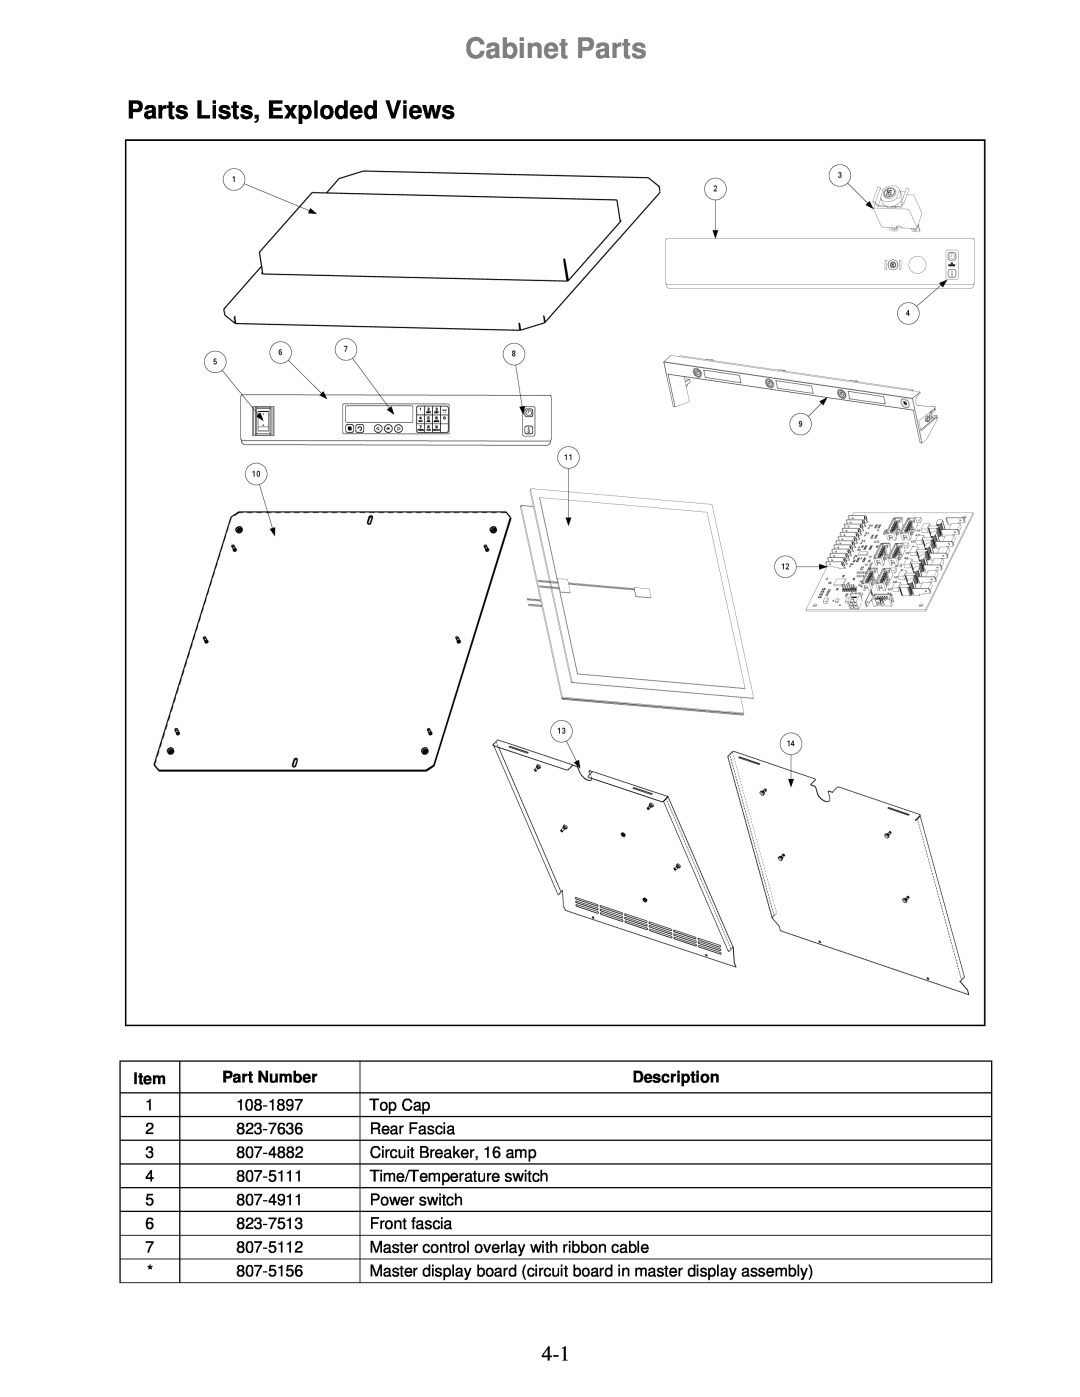 Frymaster UHC-HD manual Cabinet Parts, Parts Lists, Exploded Views, Part Number, Description 